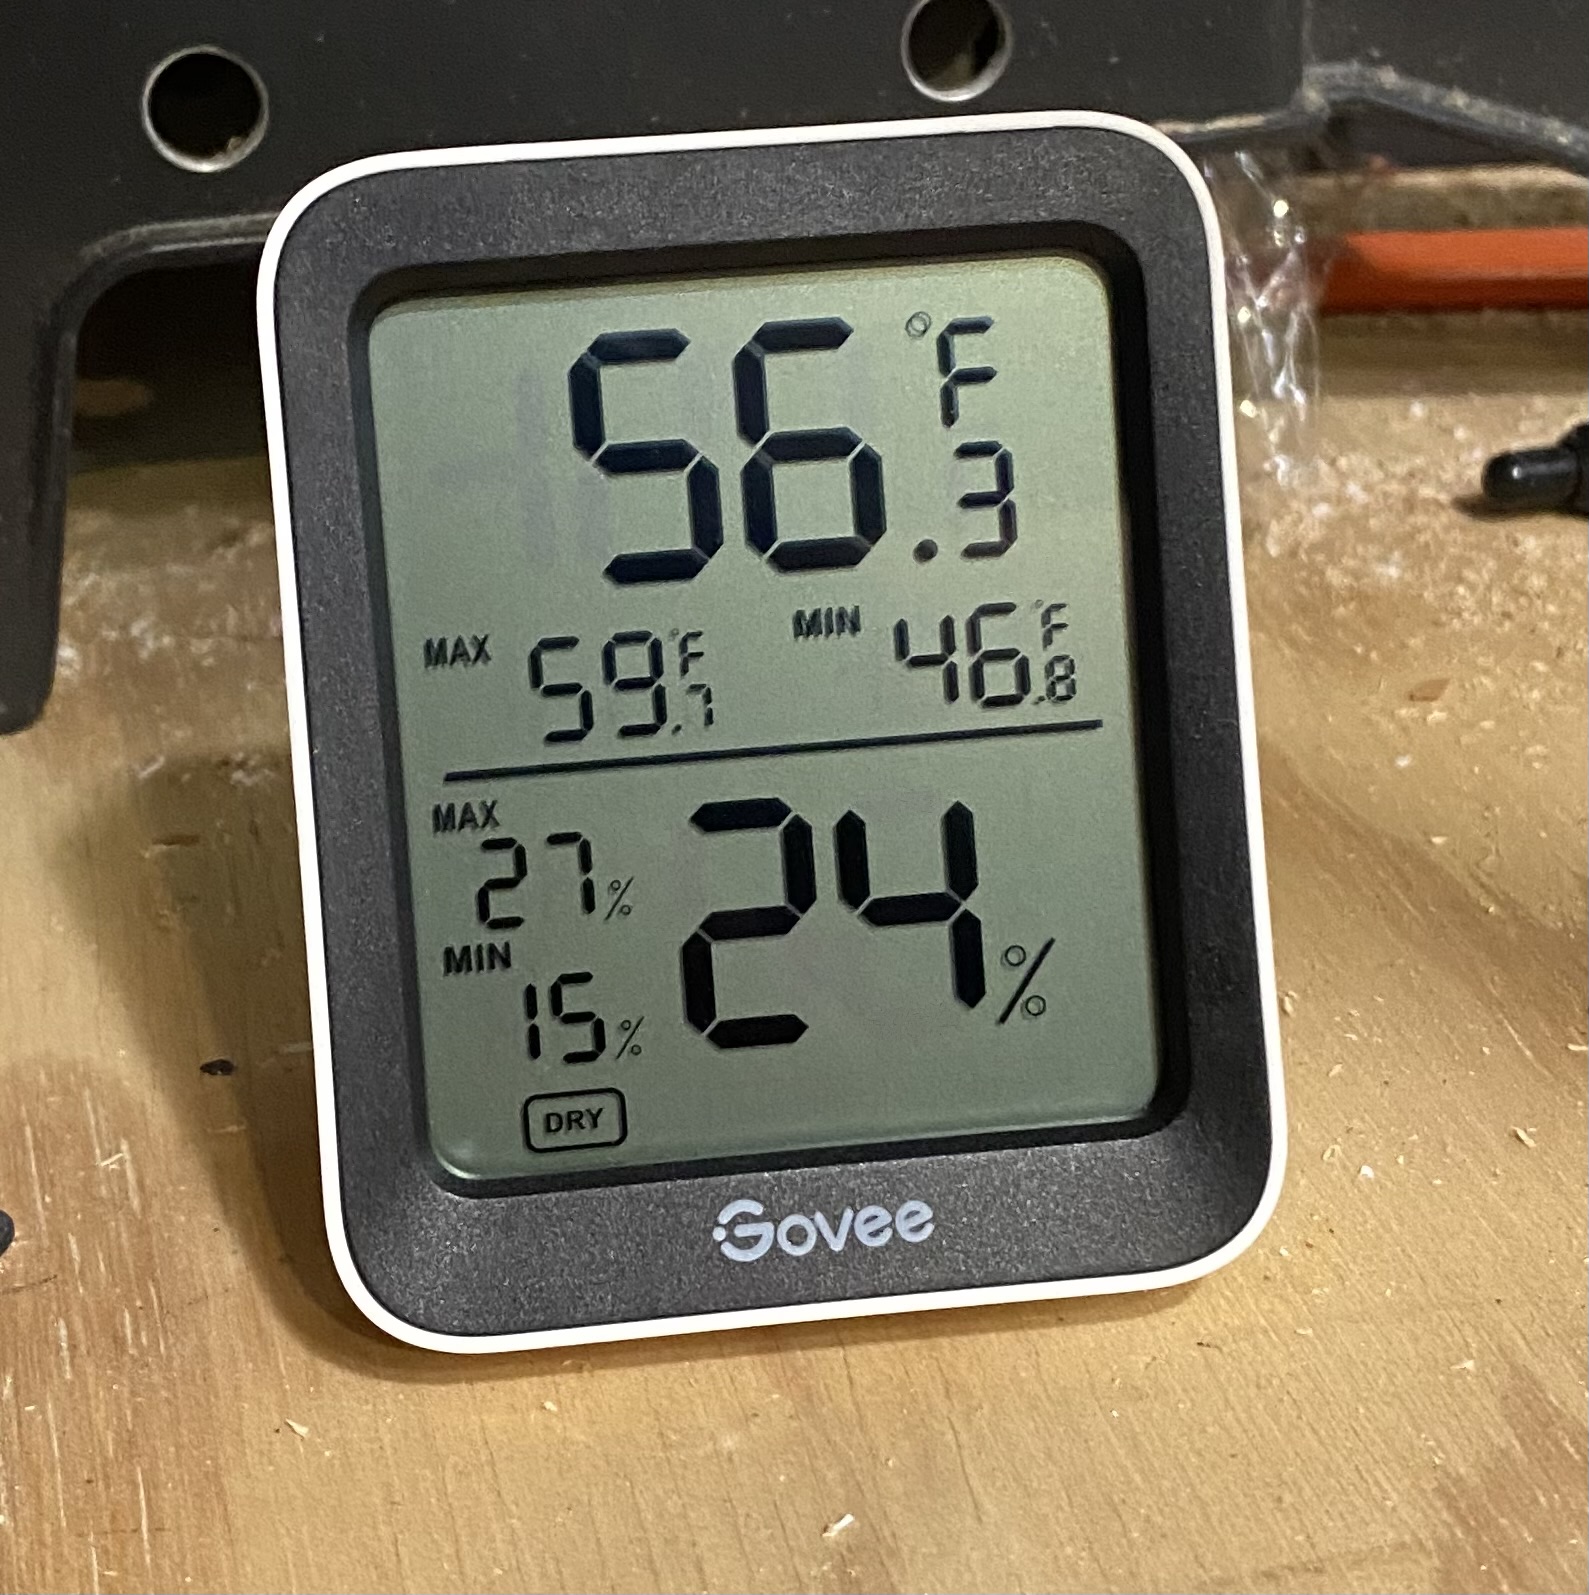 Govee Bluetooth Hygrometer Thermometer H5075